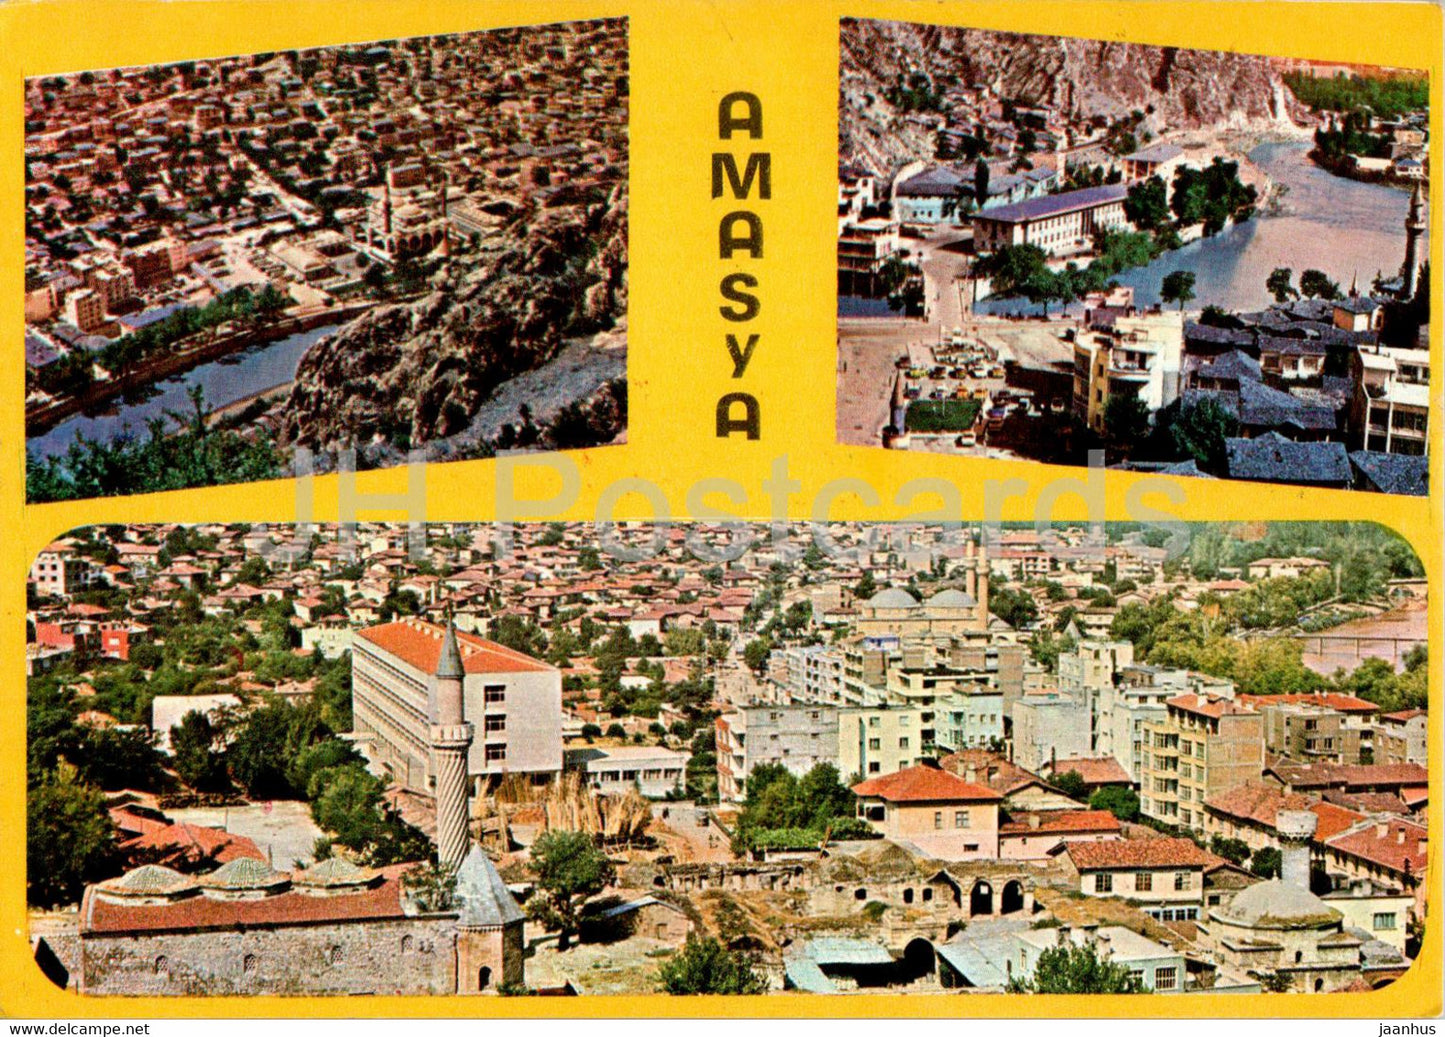 Amasya - Amasyadan uc muhtelif gorunus - multiview - 0520 - Turkey - unused - JH Postcards